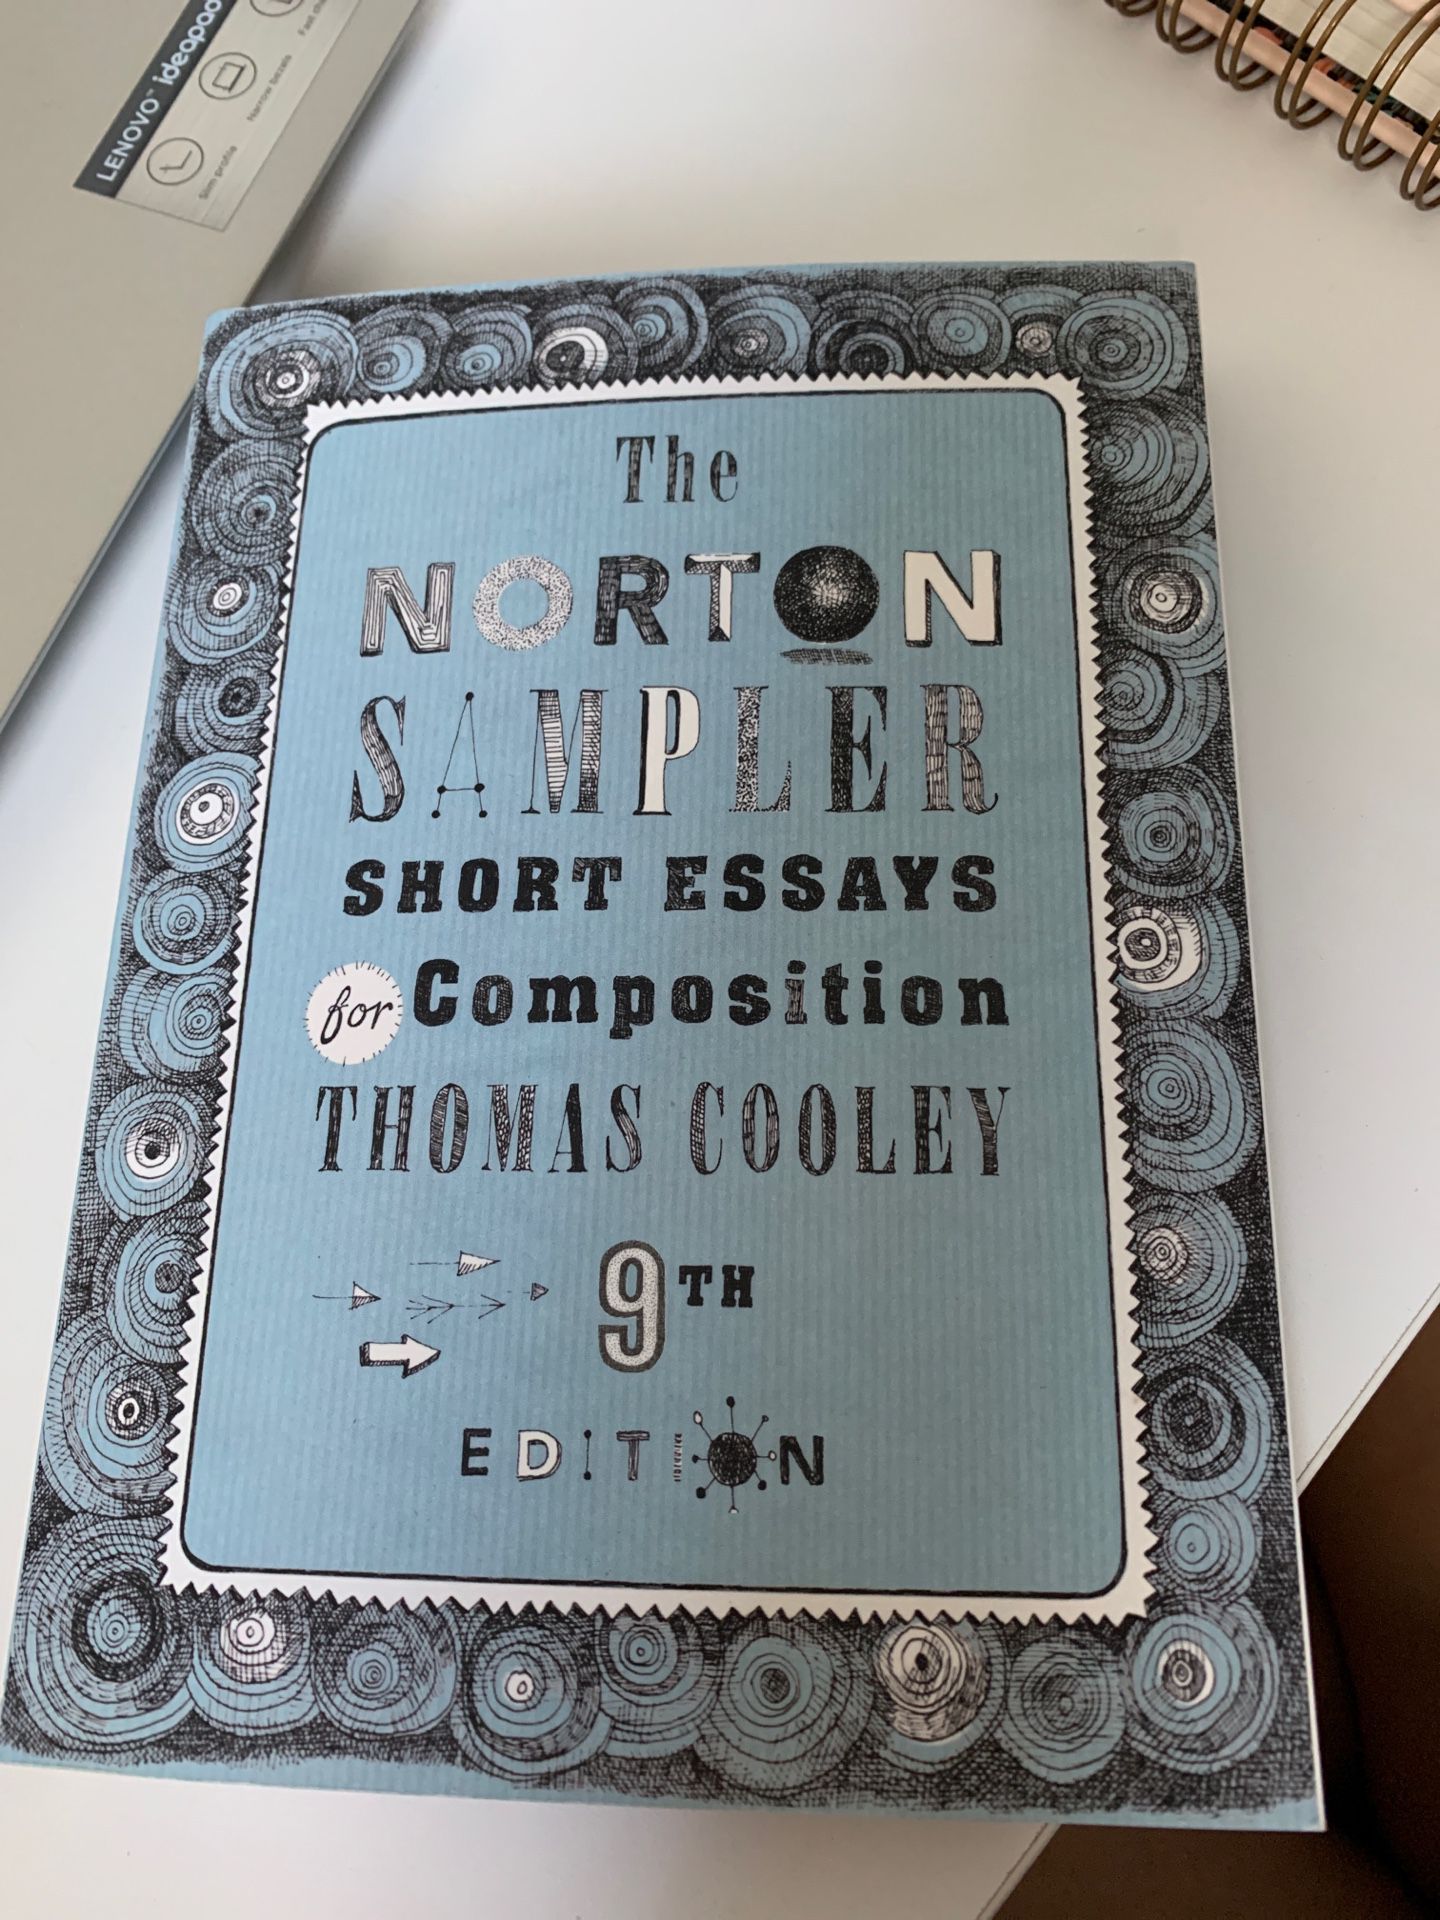 The Norton sampler shirt essays 9th edition